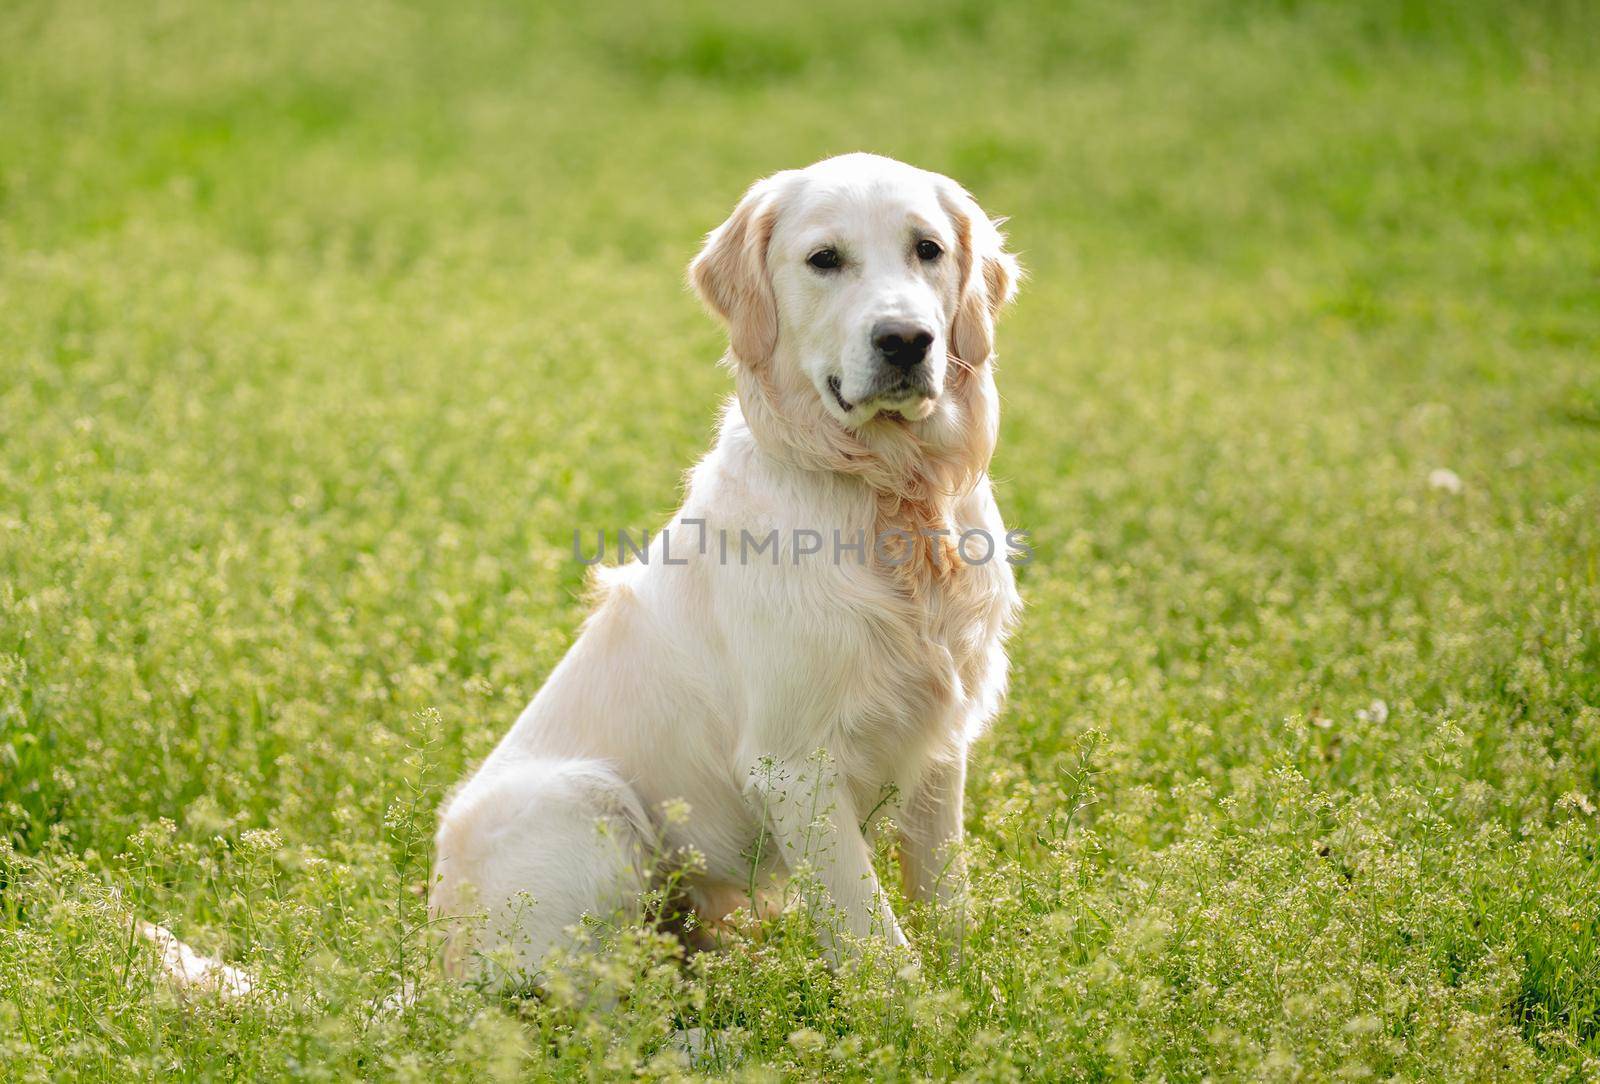 Cute golden retriever dog sitting on blooming field